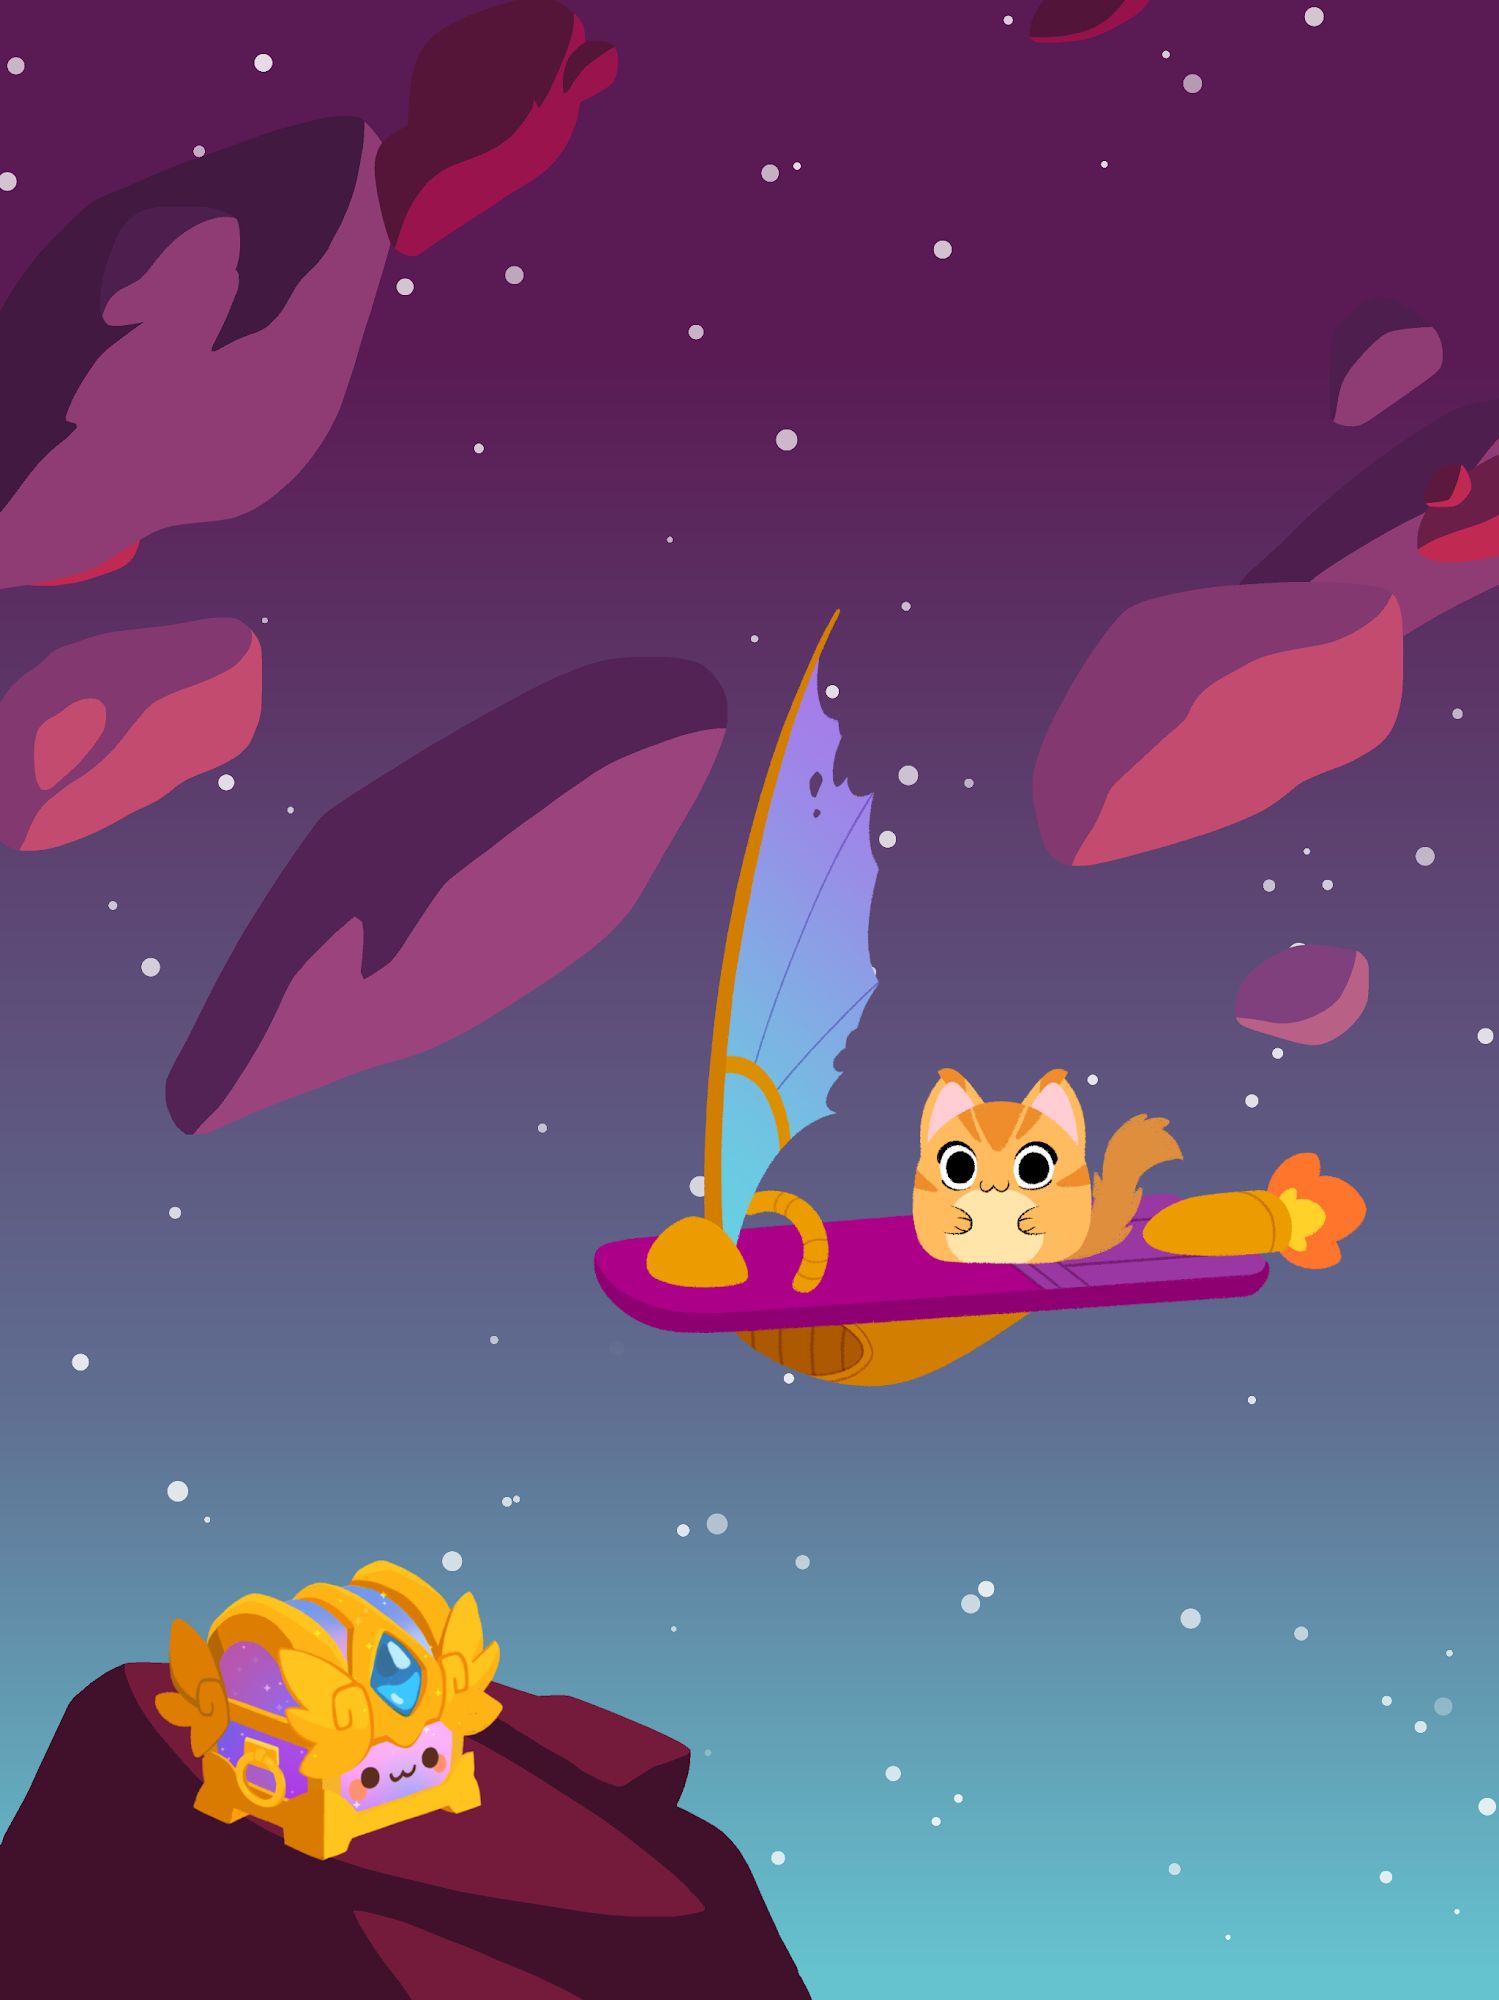 Download Sailor Cats 2: Space Odyssey für Android kostenlos.